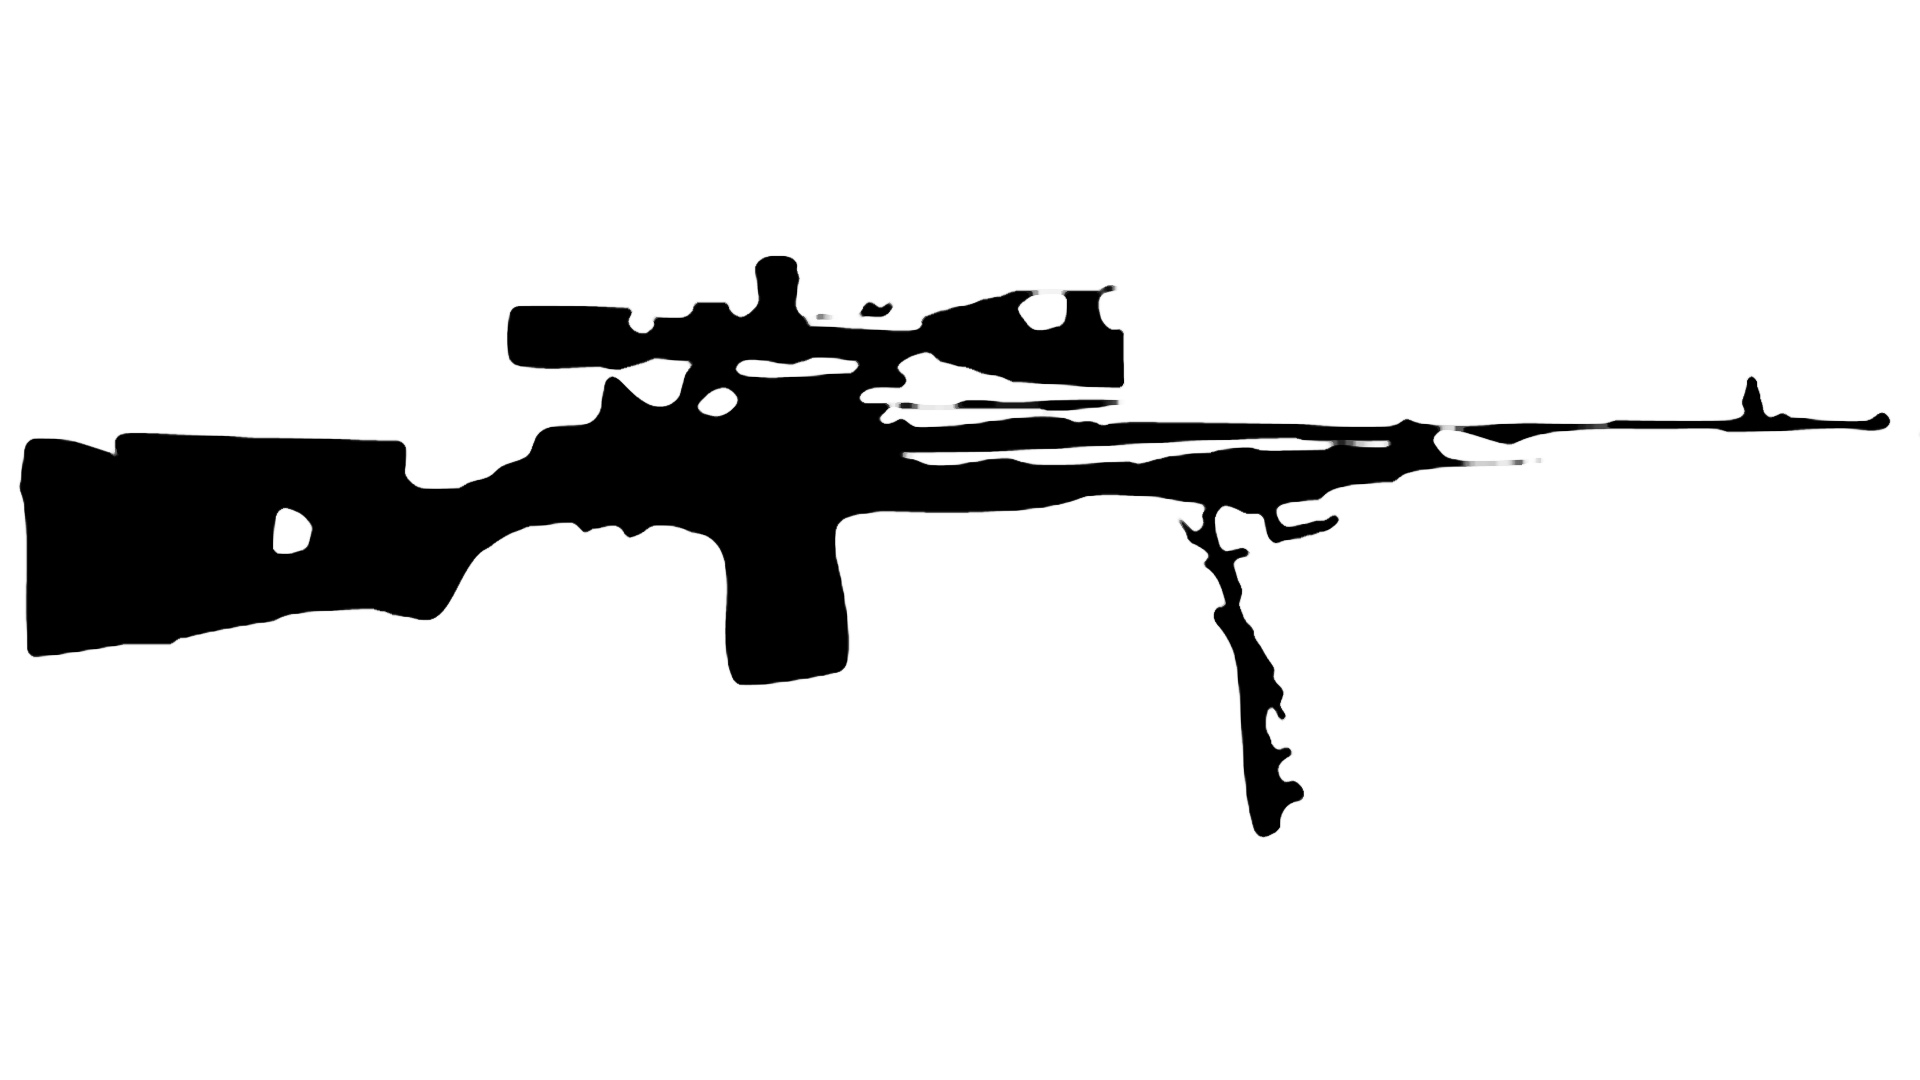 sniper rifles - desktop wallpaper